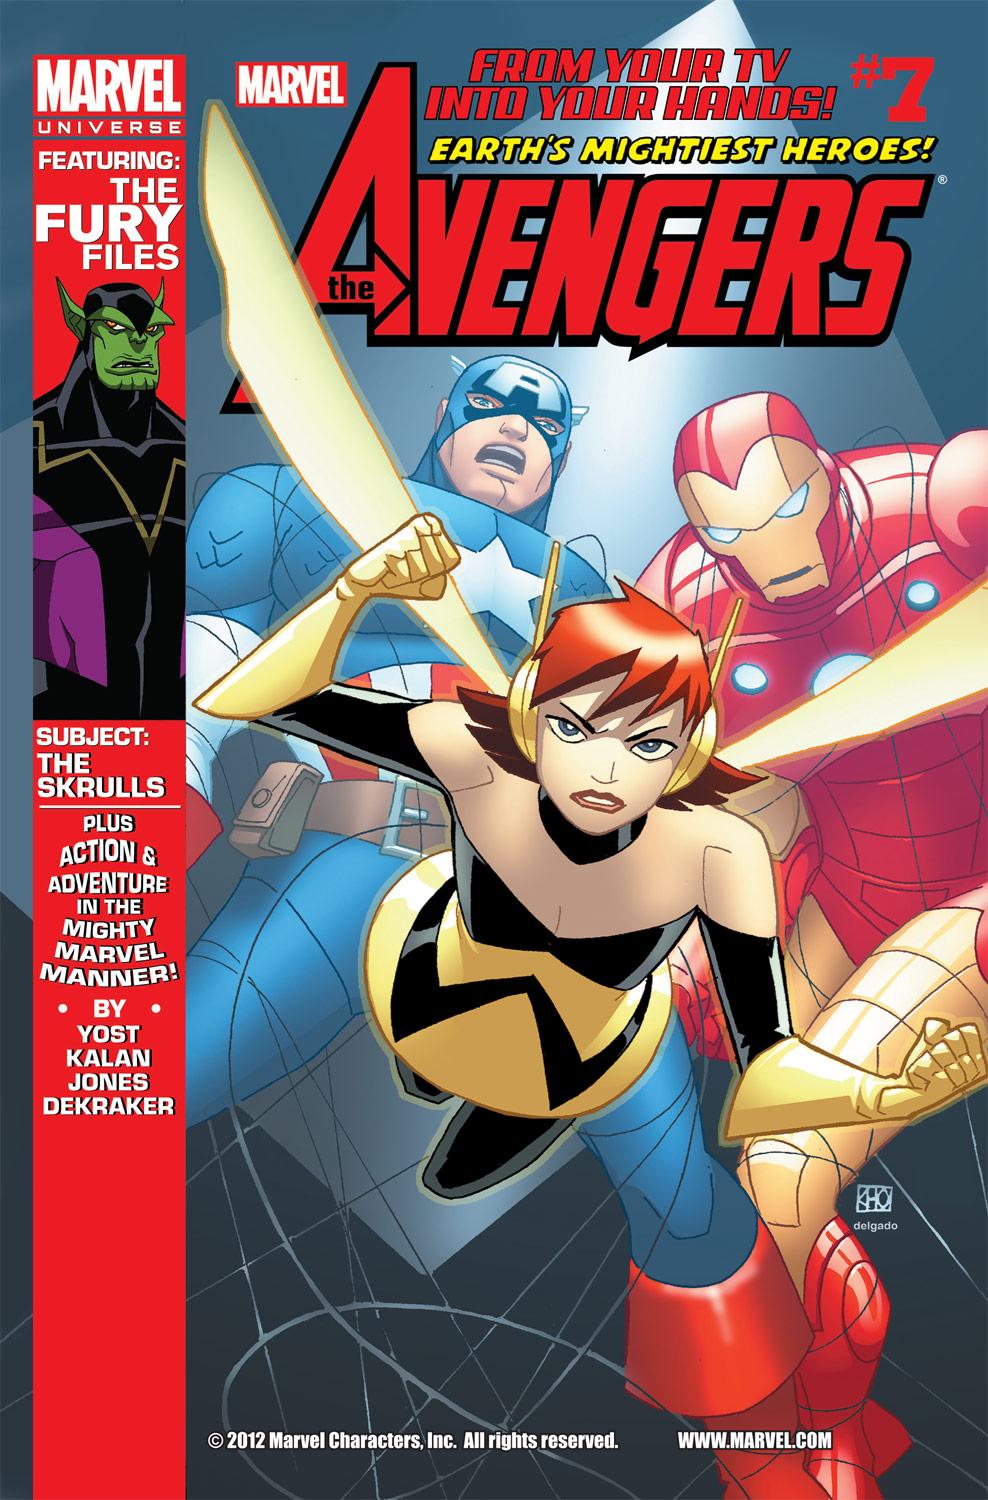 Marvel Universe Avengers: Earth's Mightiest Heroes (2012) #7